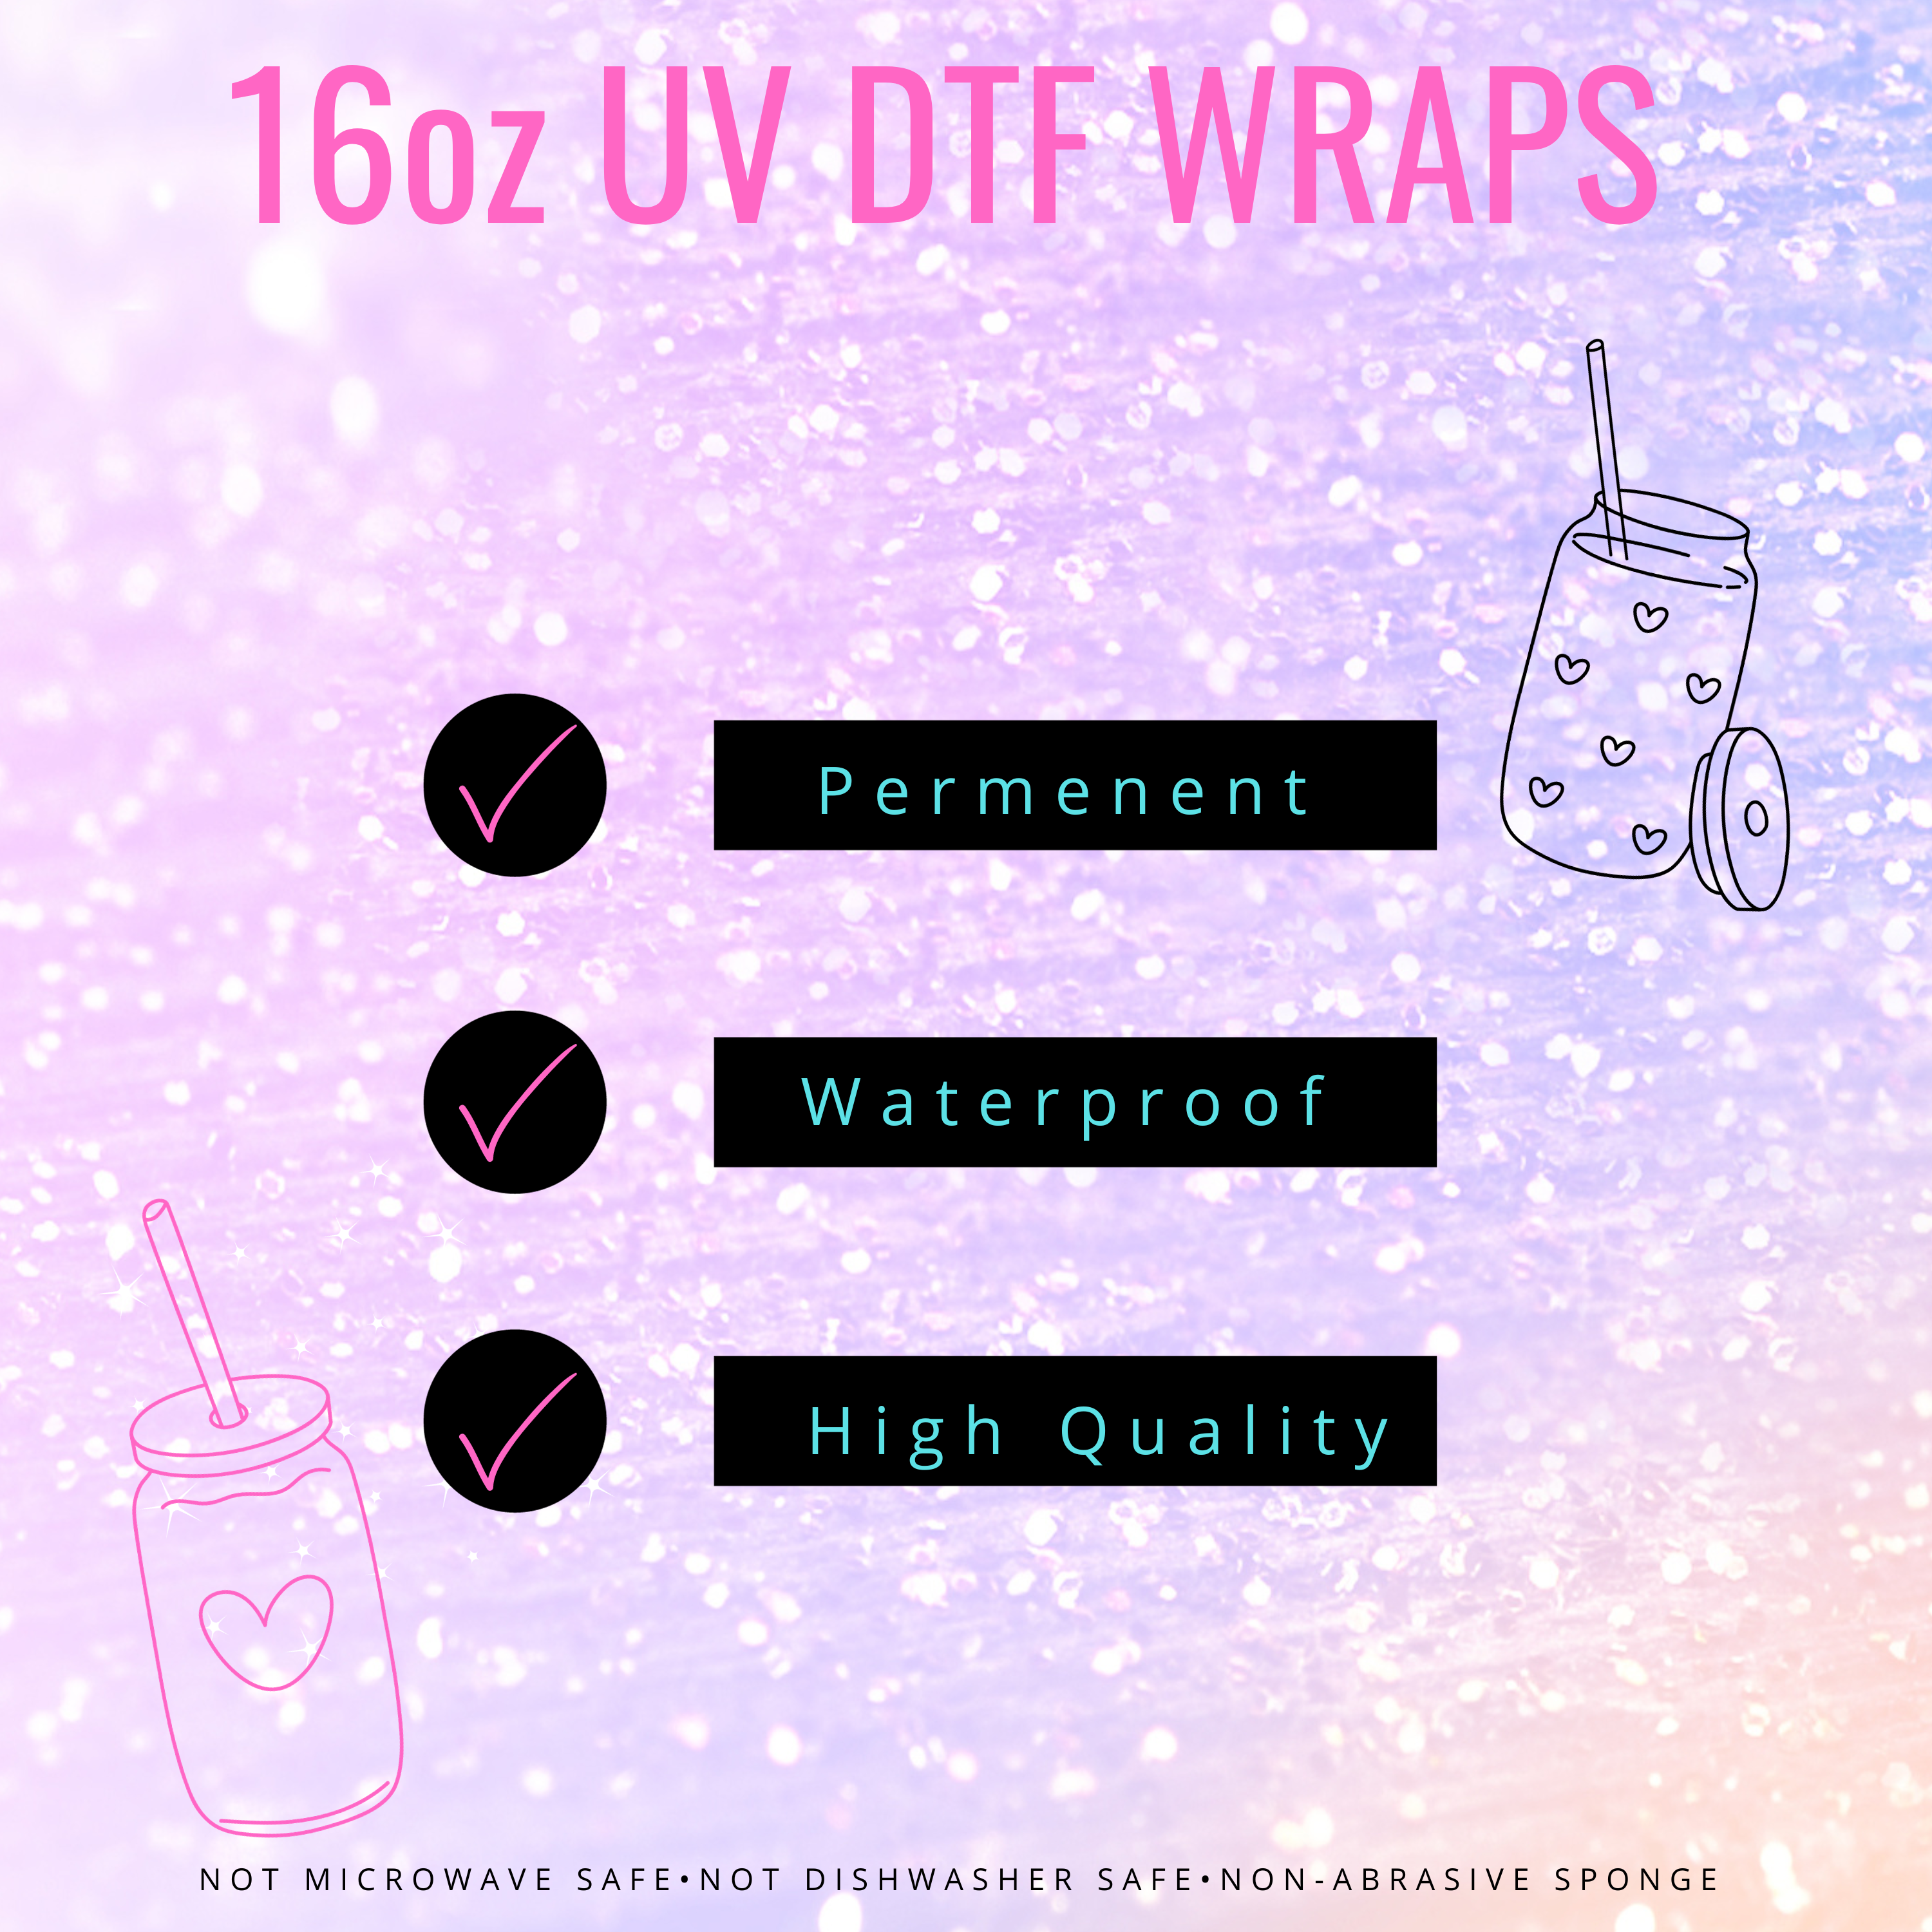 Uv Dtf Cup Wrap Ready To Ship Ready To Apply Wrap 16oz Wrap, 44% OFF